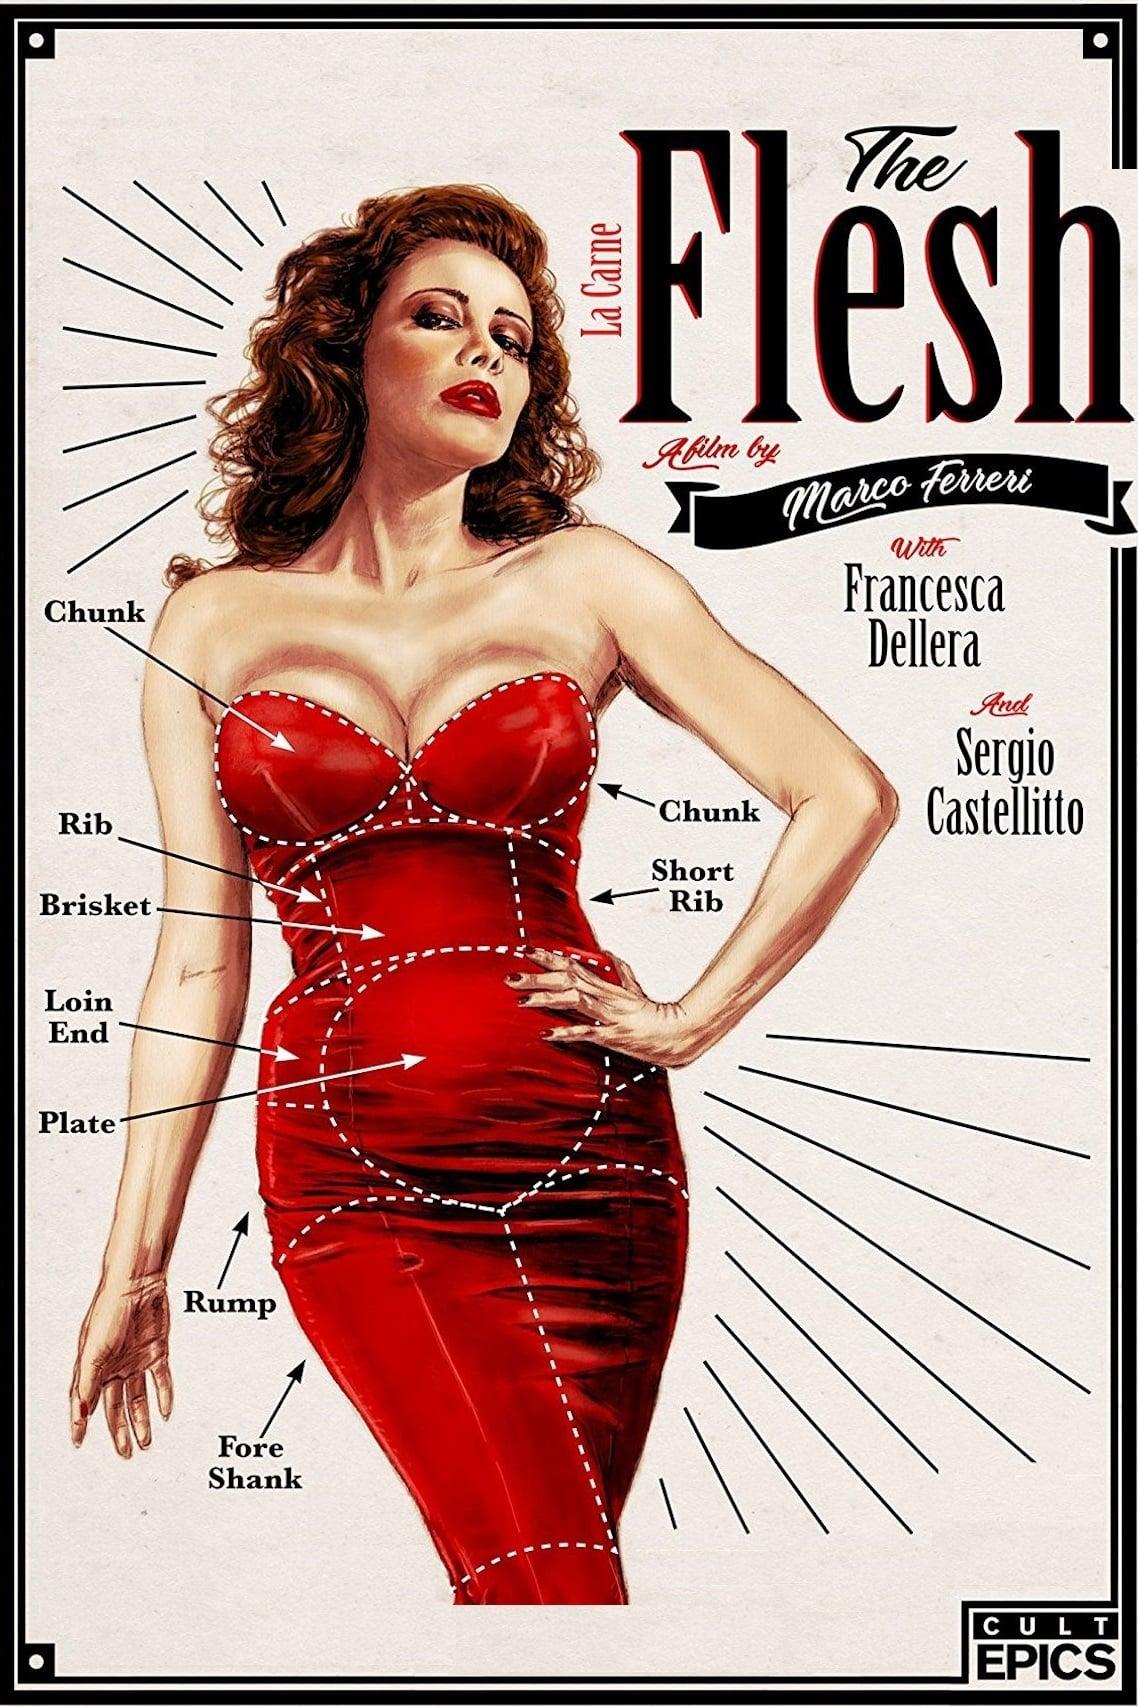 The Flesh poster